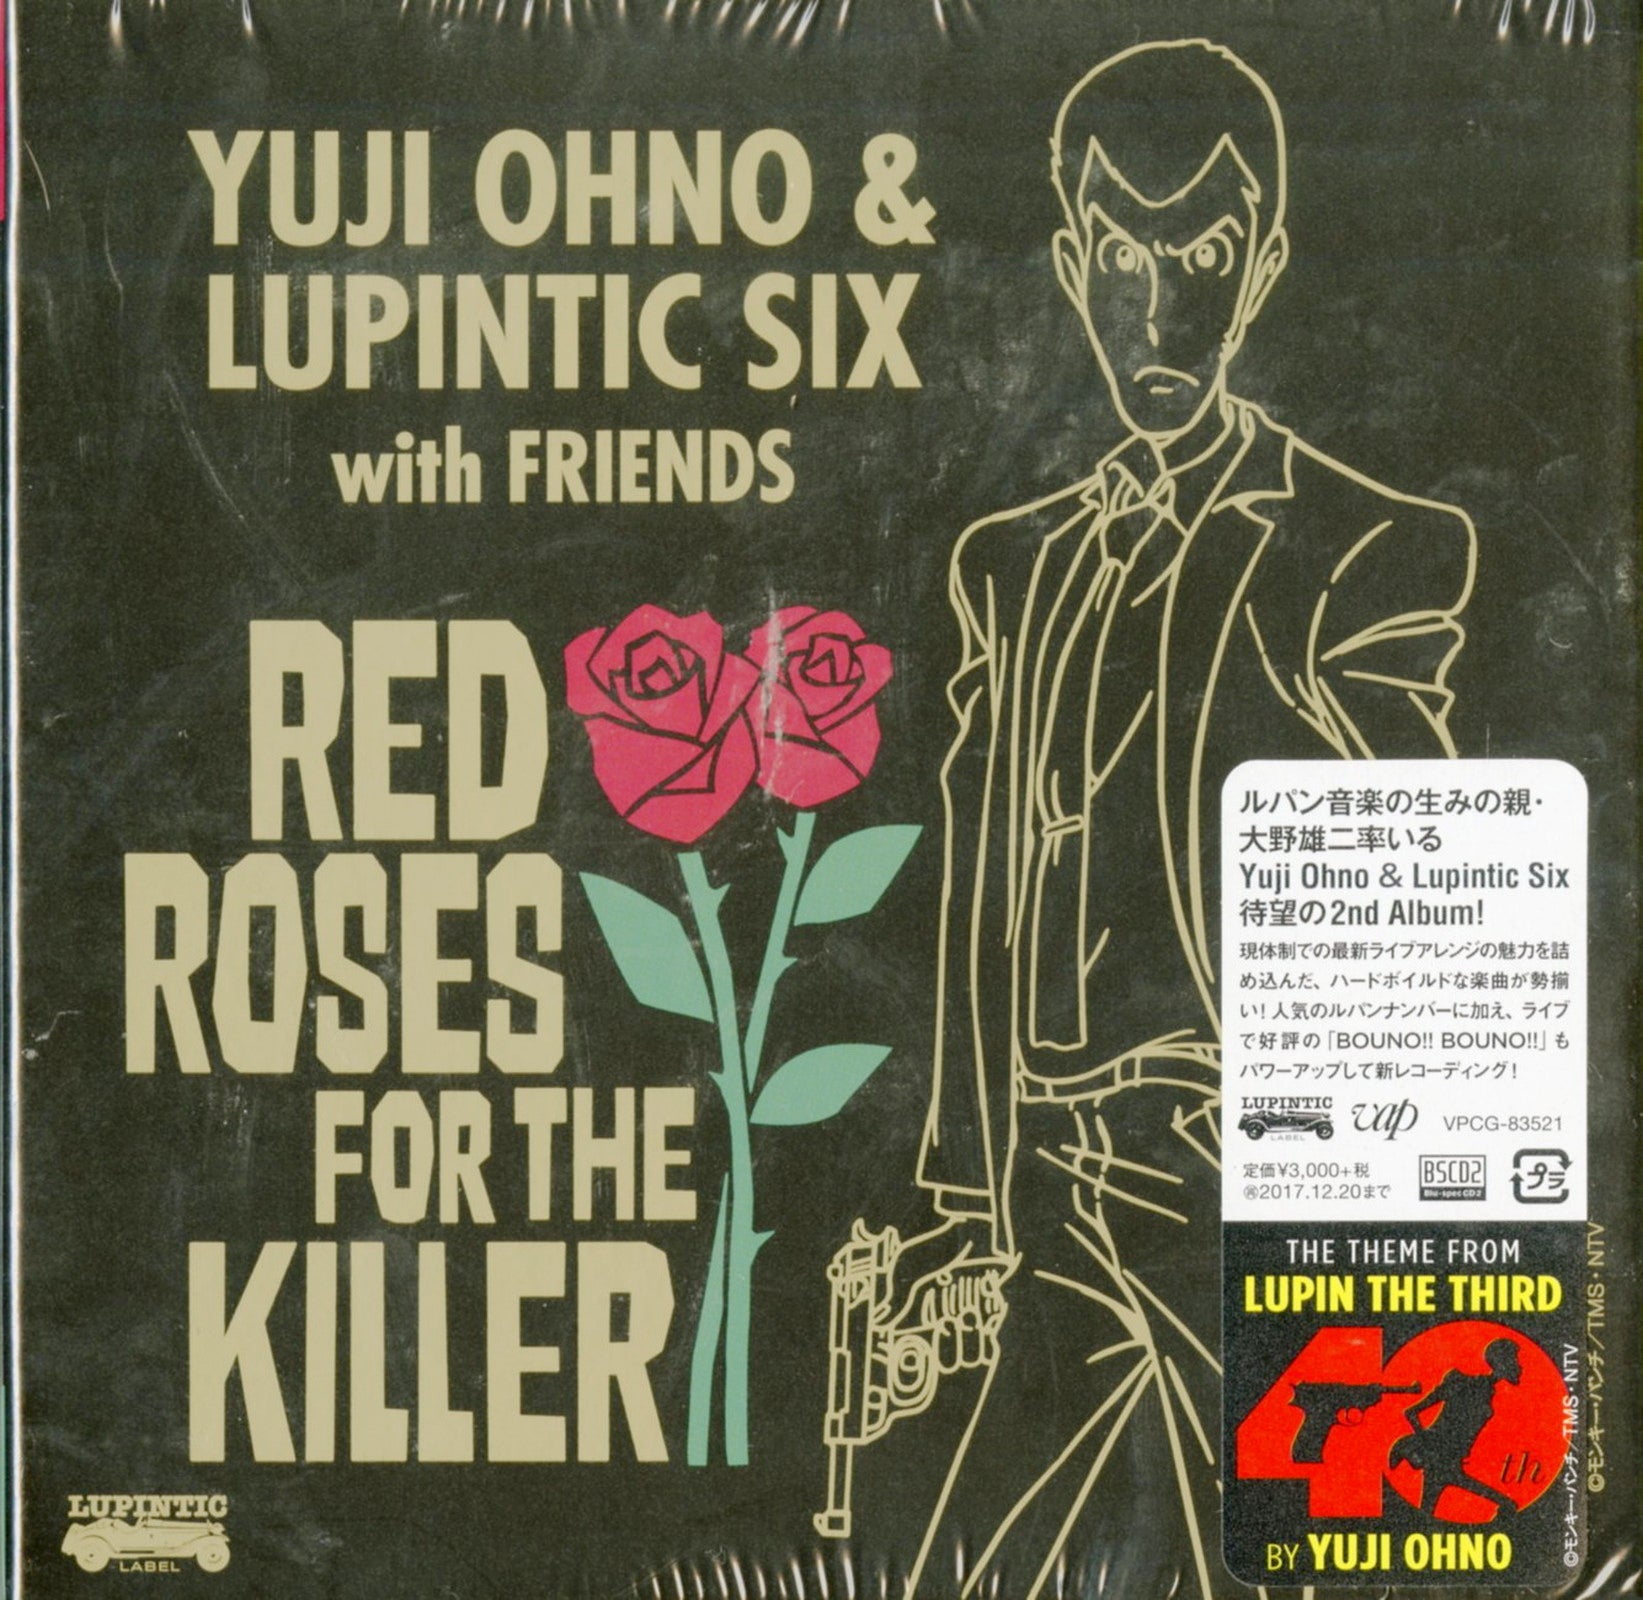 RED ROSES FOR THE KILLER ルパン三世 - 通販 - gofukuyasan.com